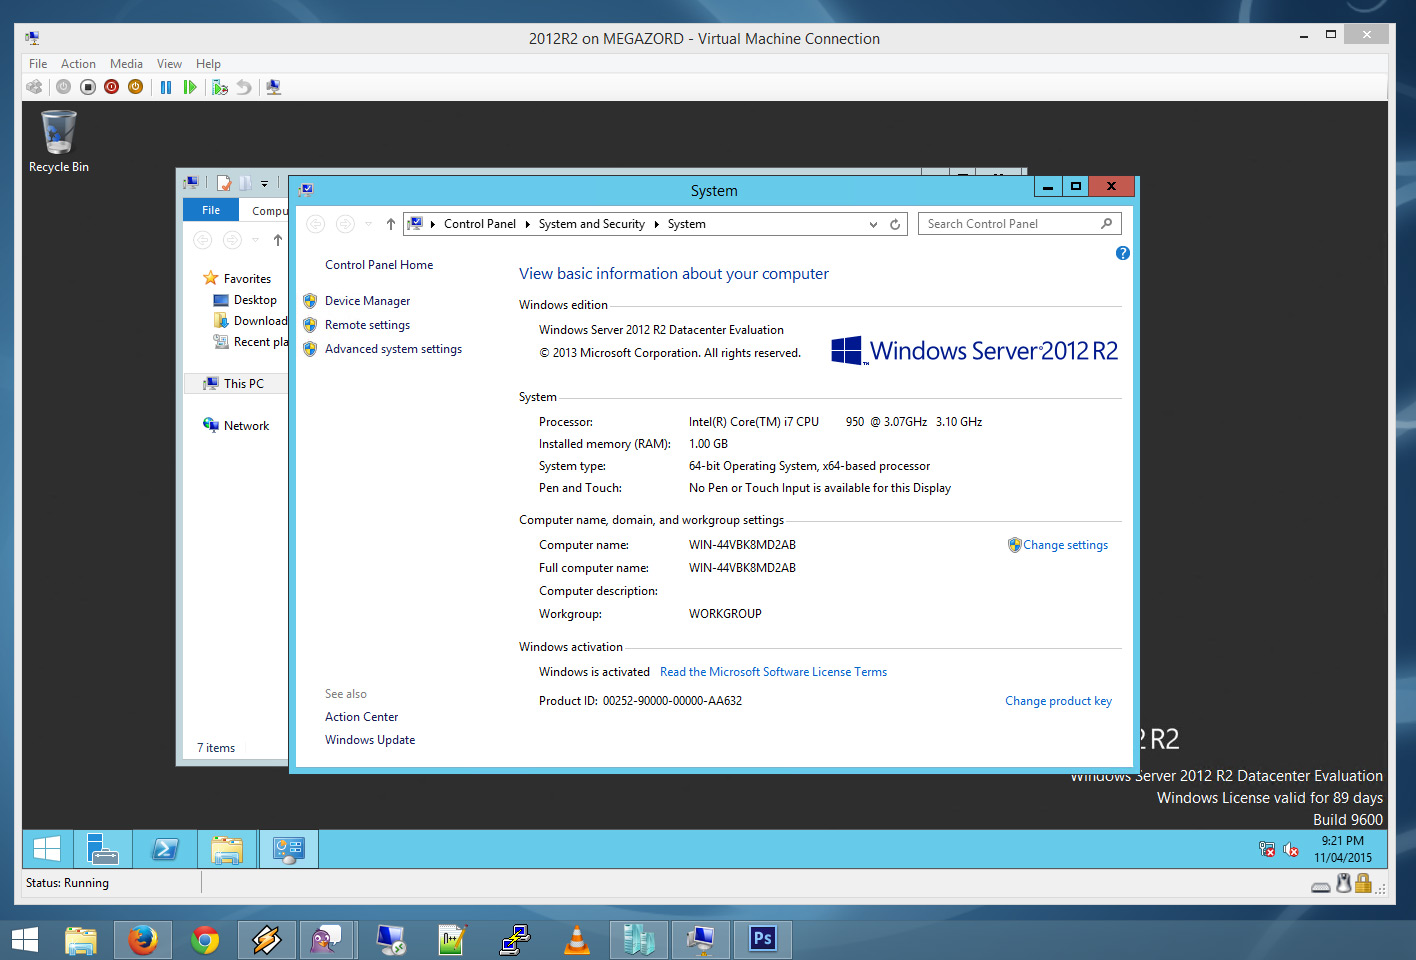 Hyper-V in Windows 8.1